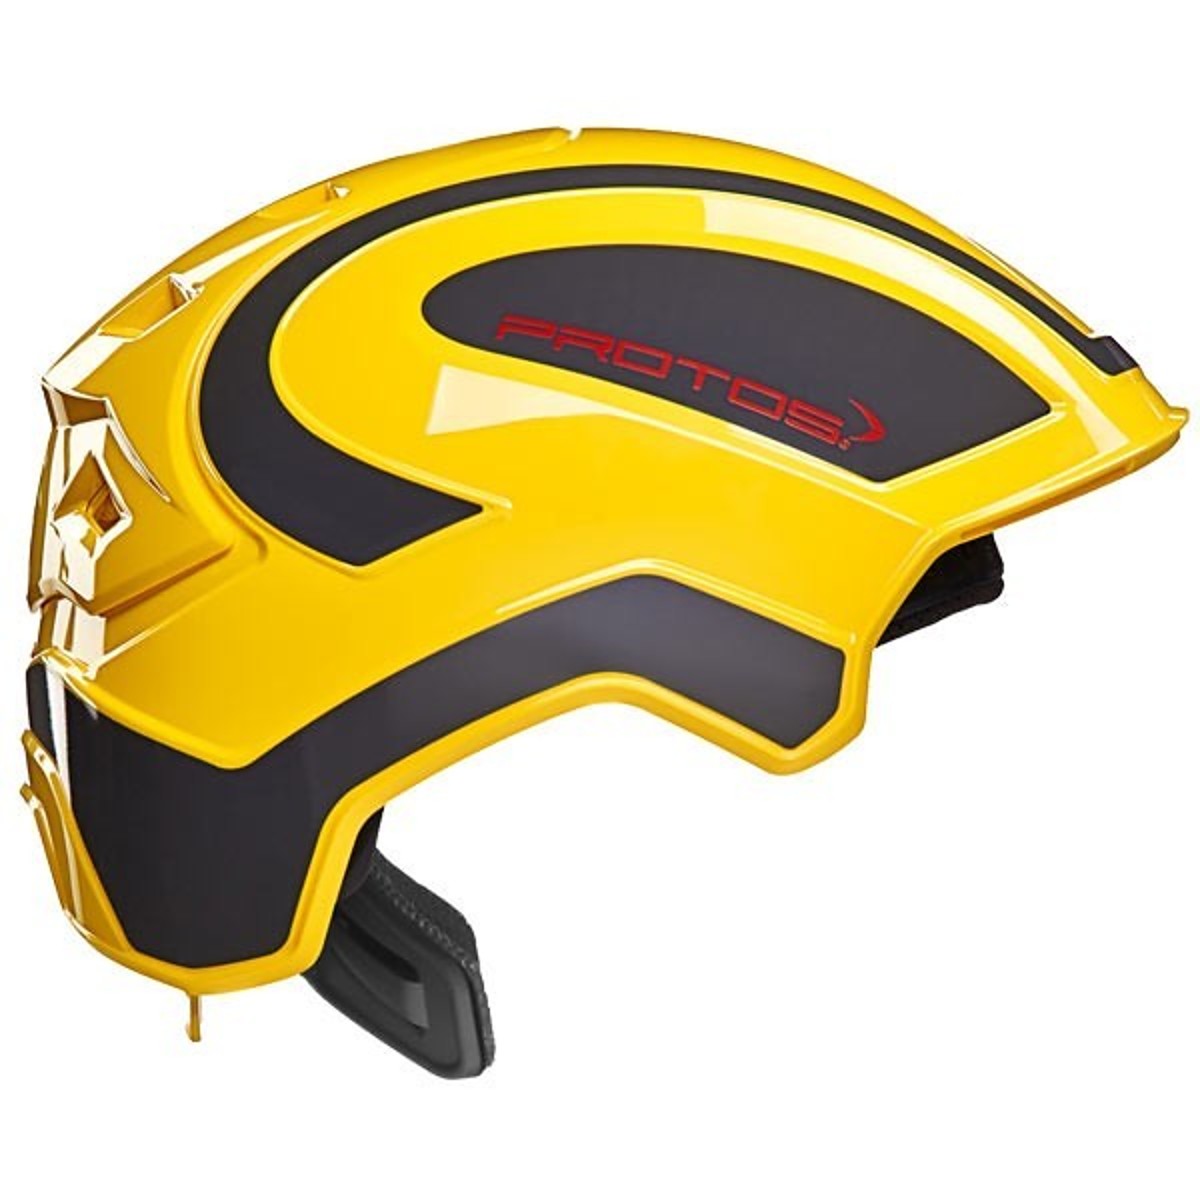 Protos Helm maximaler Schutz - 3